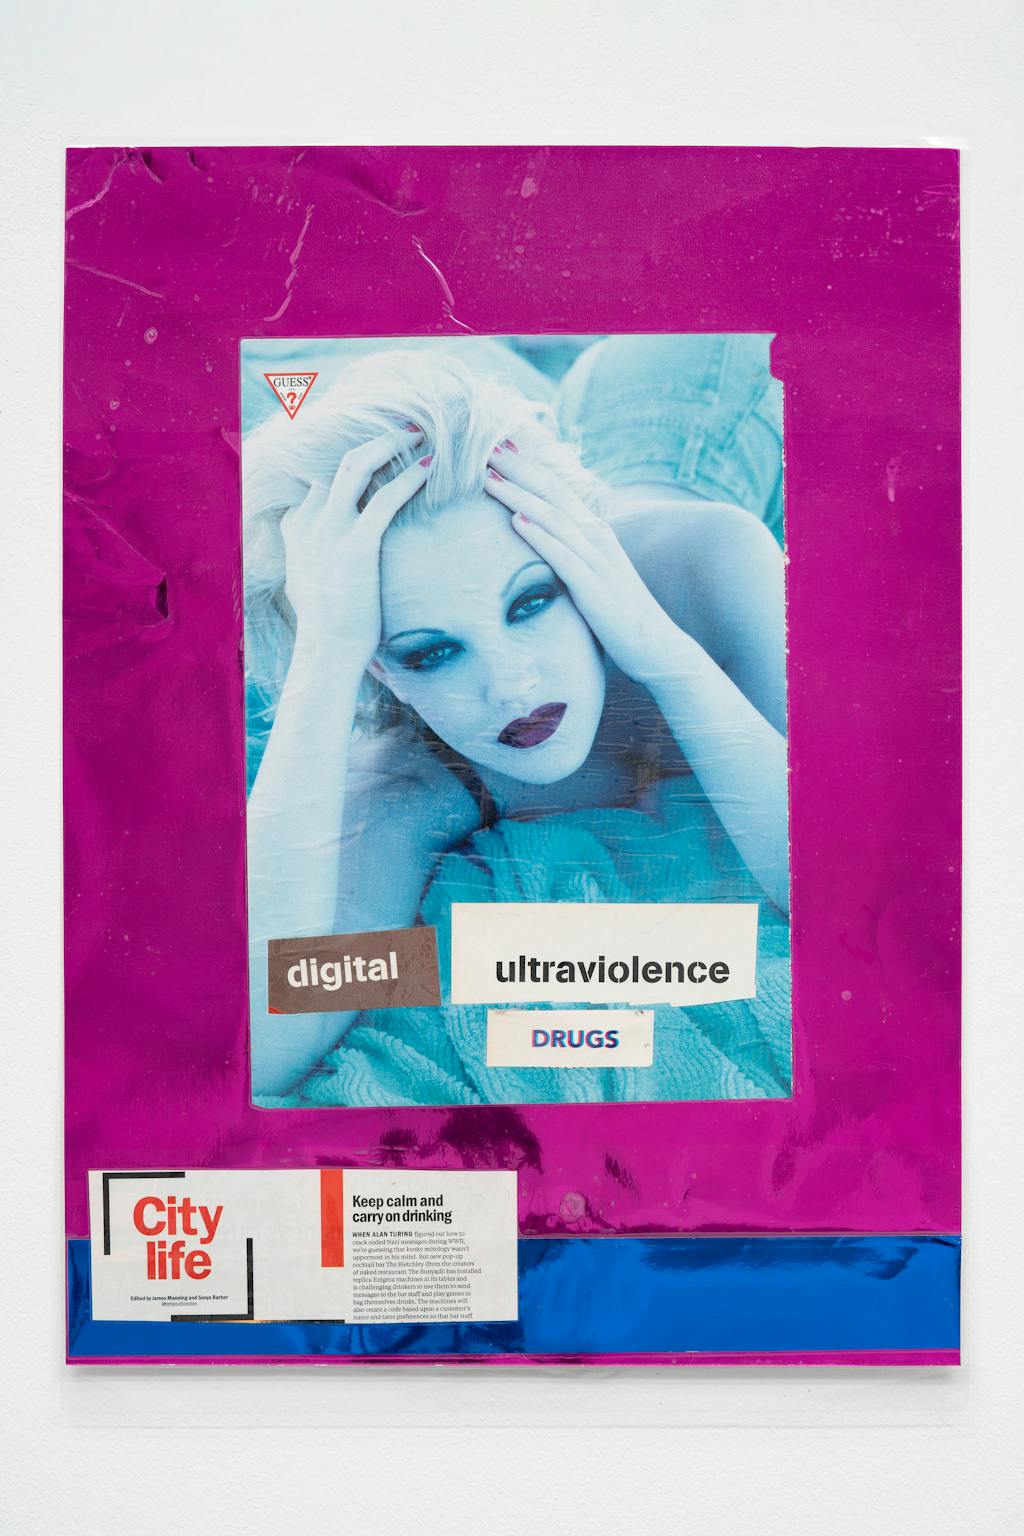 Untitled (Drew Barrymore digital ultraviolence DRUGS City life Keep calm...) - © Paris Internationale